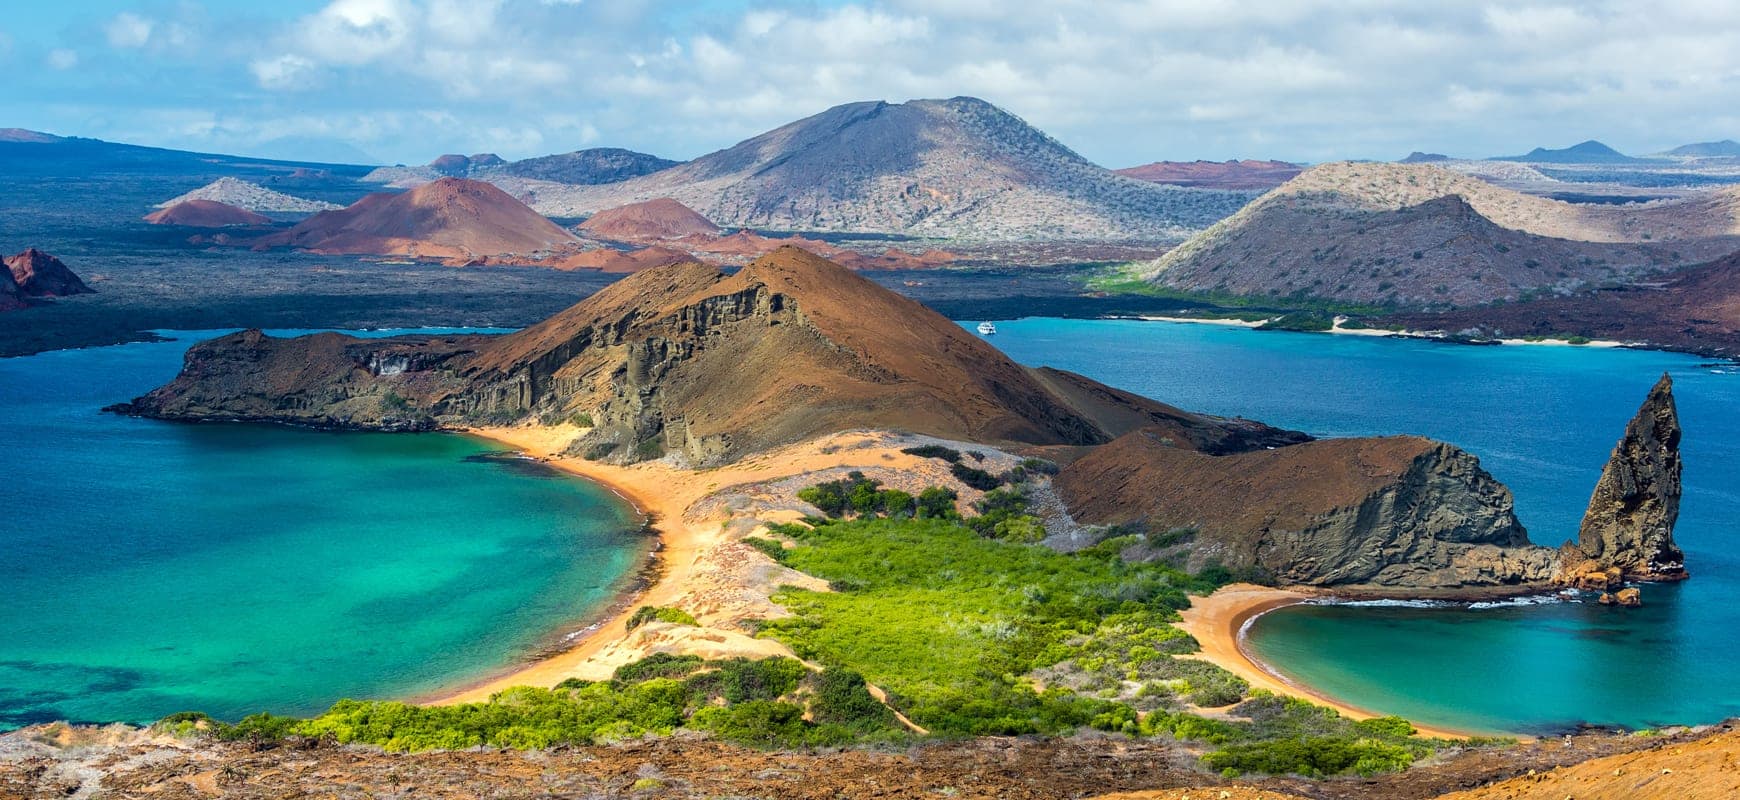 52 Tauchsafaris - Galapagosinseln - LiveAboard.com